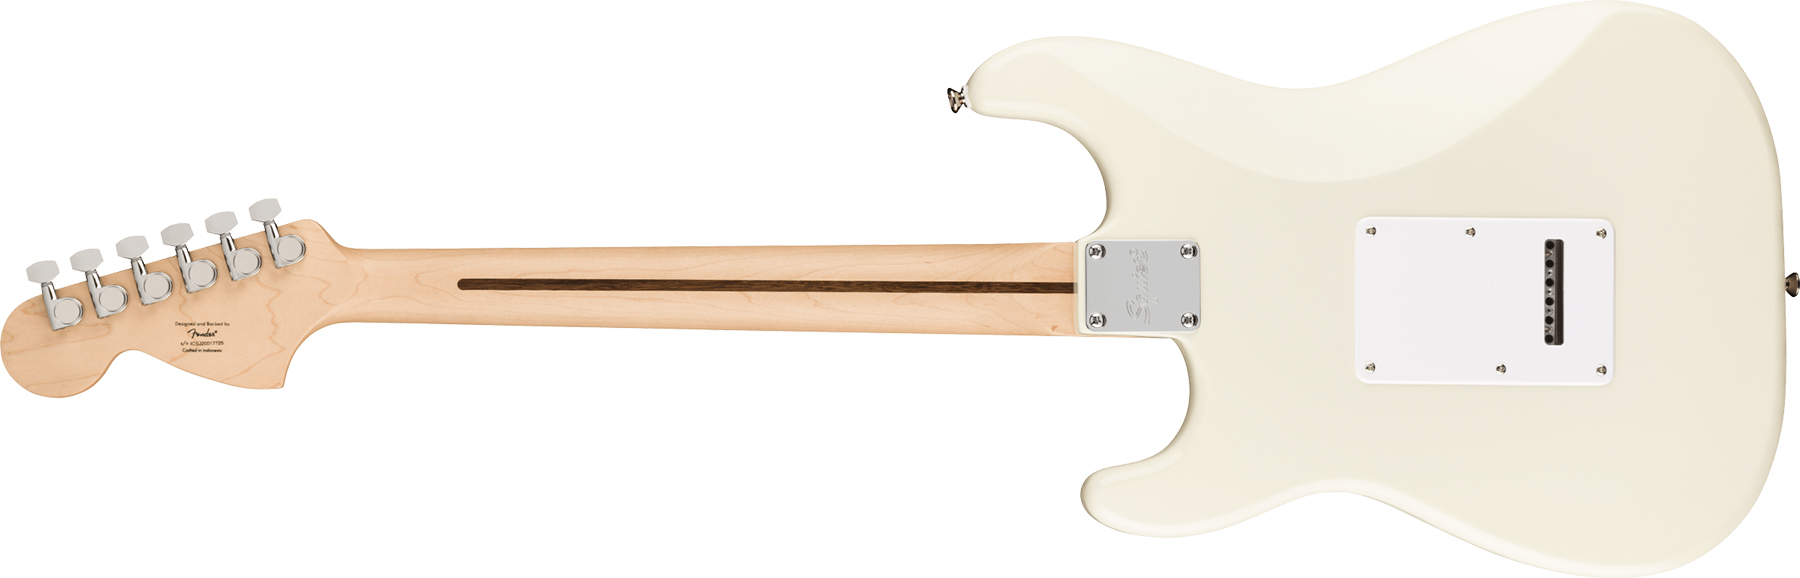 Squier Strat Affinity 2021 Sss Trem Mn - Olympic White - E-Gitarre in Str-Form - Variation 1